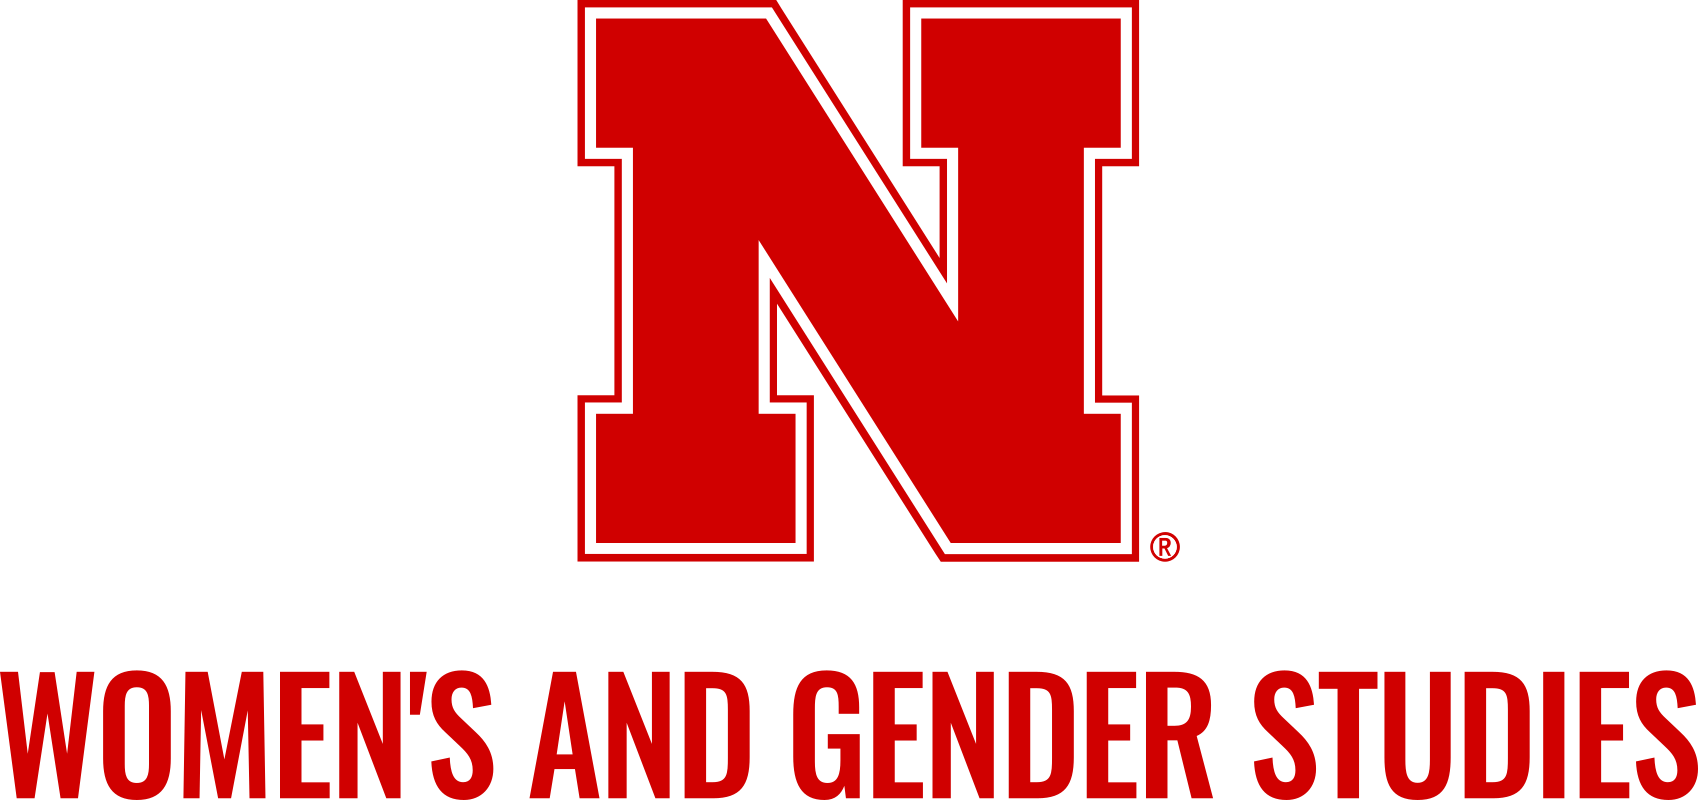 women's and gender studies logo lockup